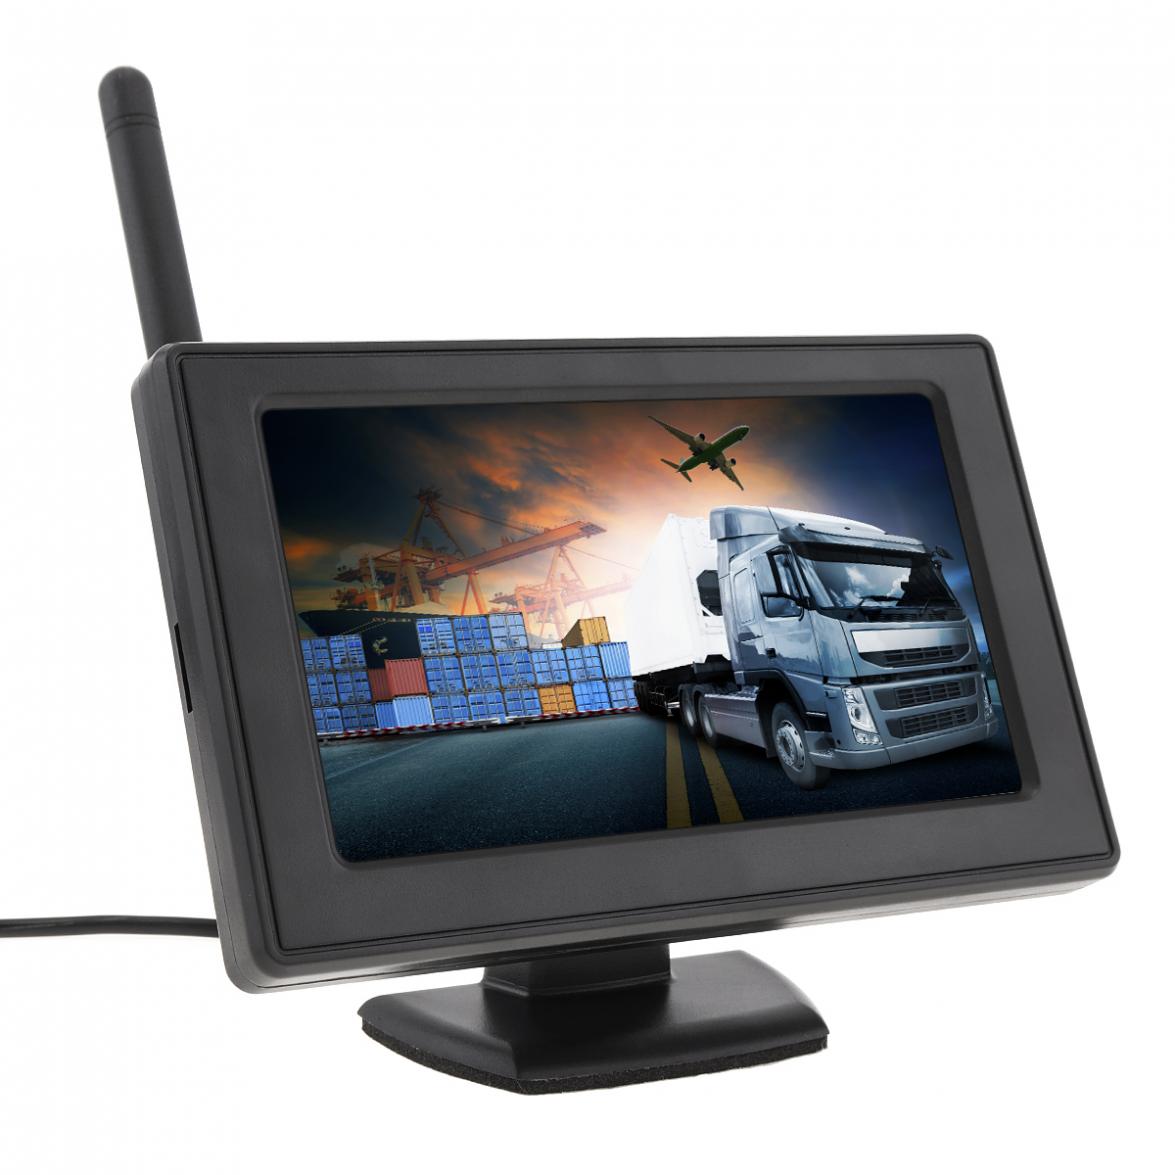 4.3 Inch Wireless Rear View Camera System TFT LCD Vehicle Rear View Monitor + Night Vision Camera for SUV RV Pickup Minivan